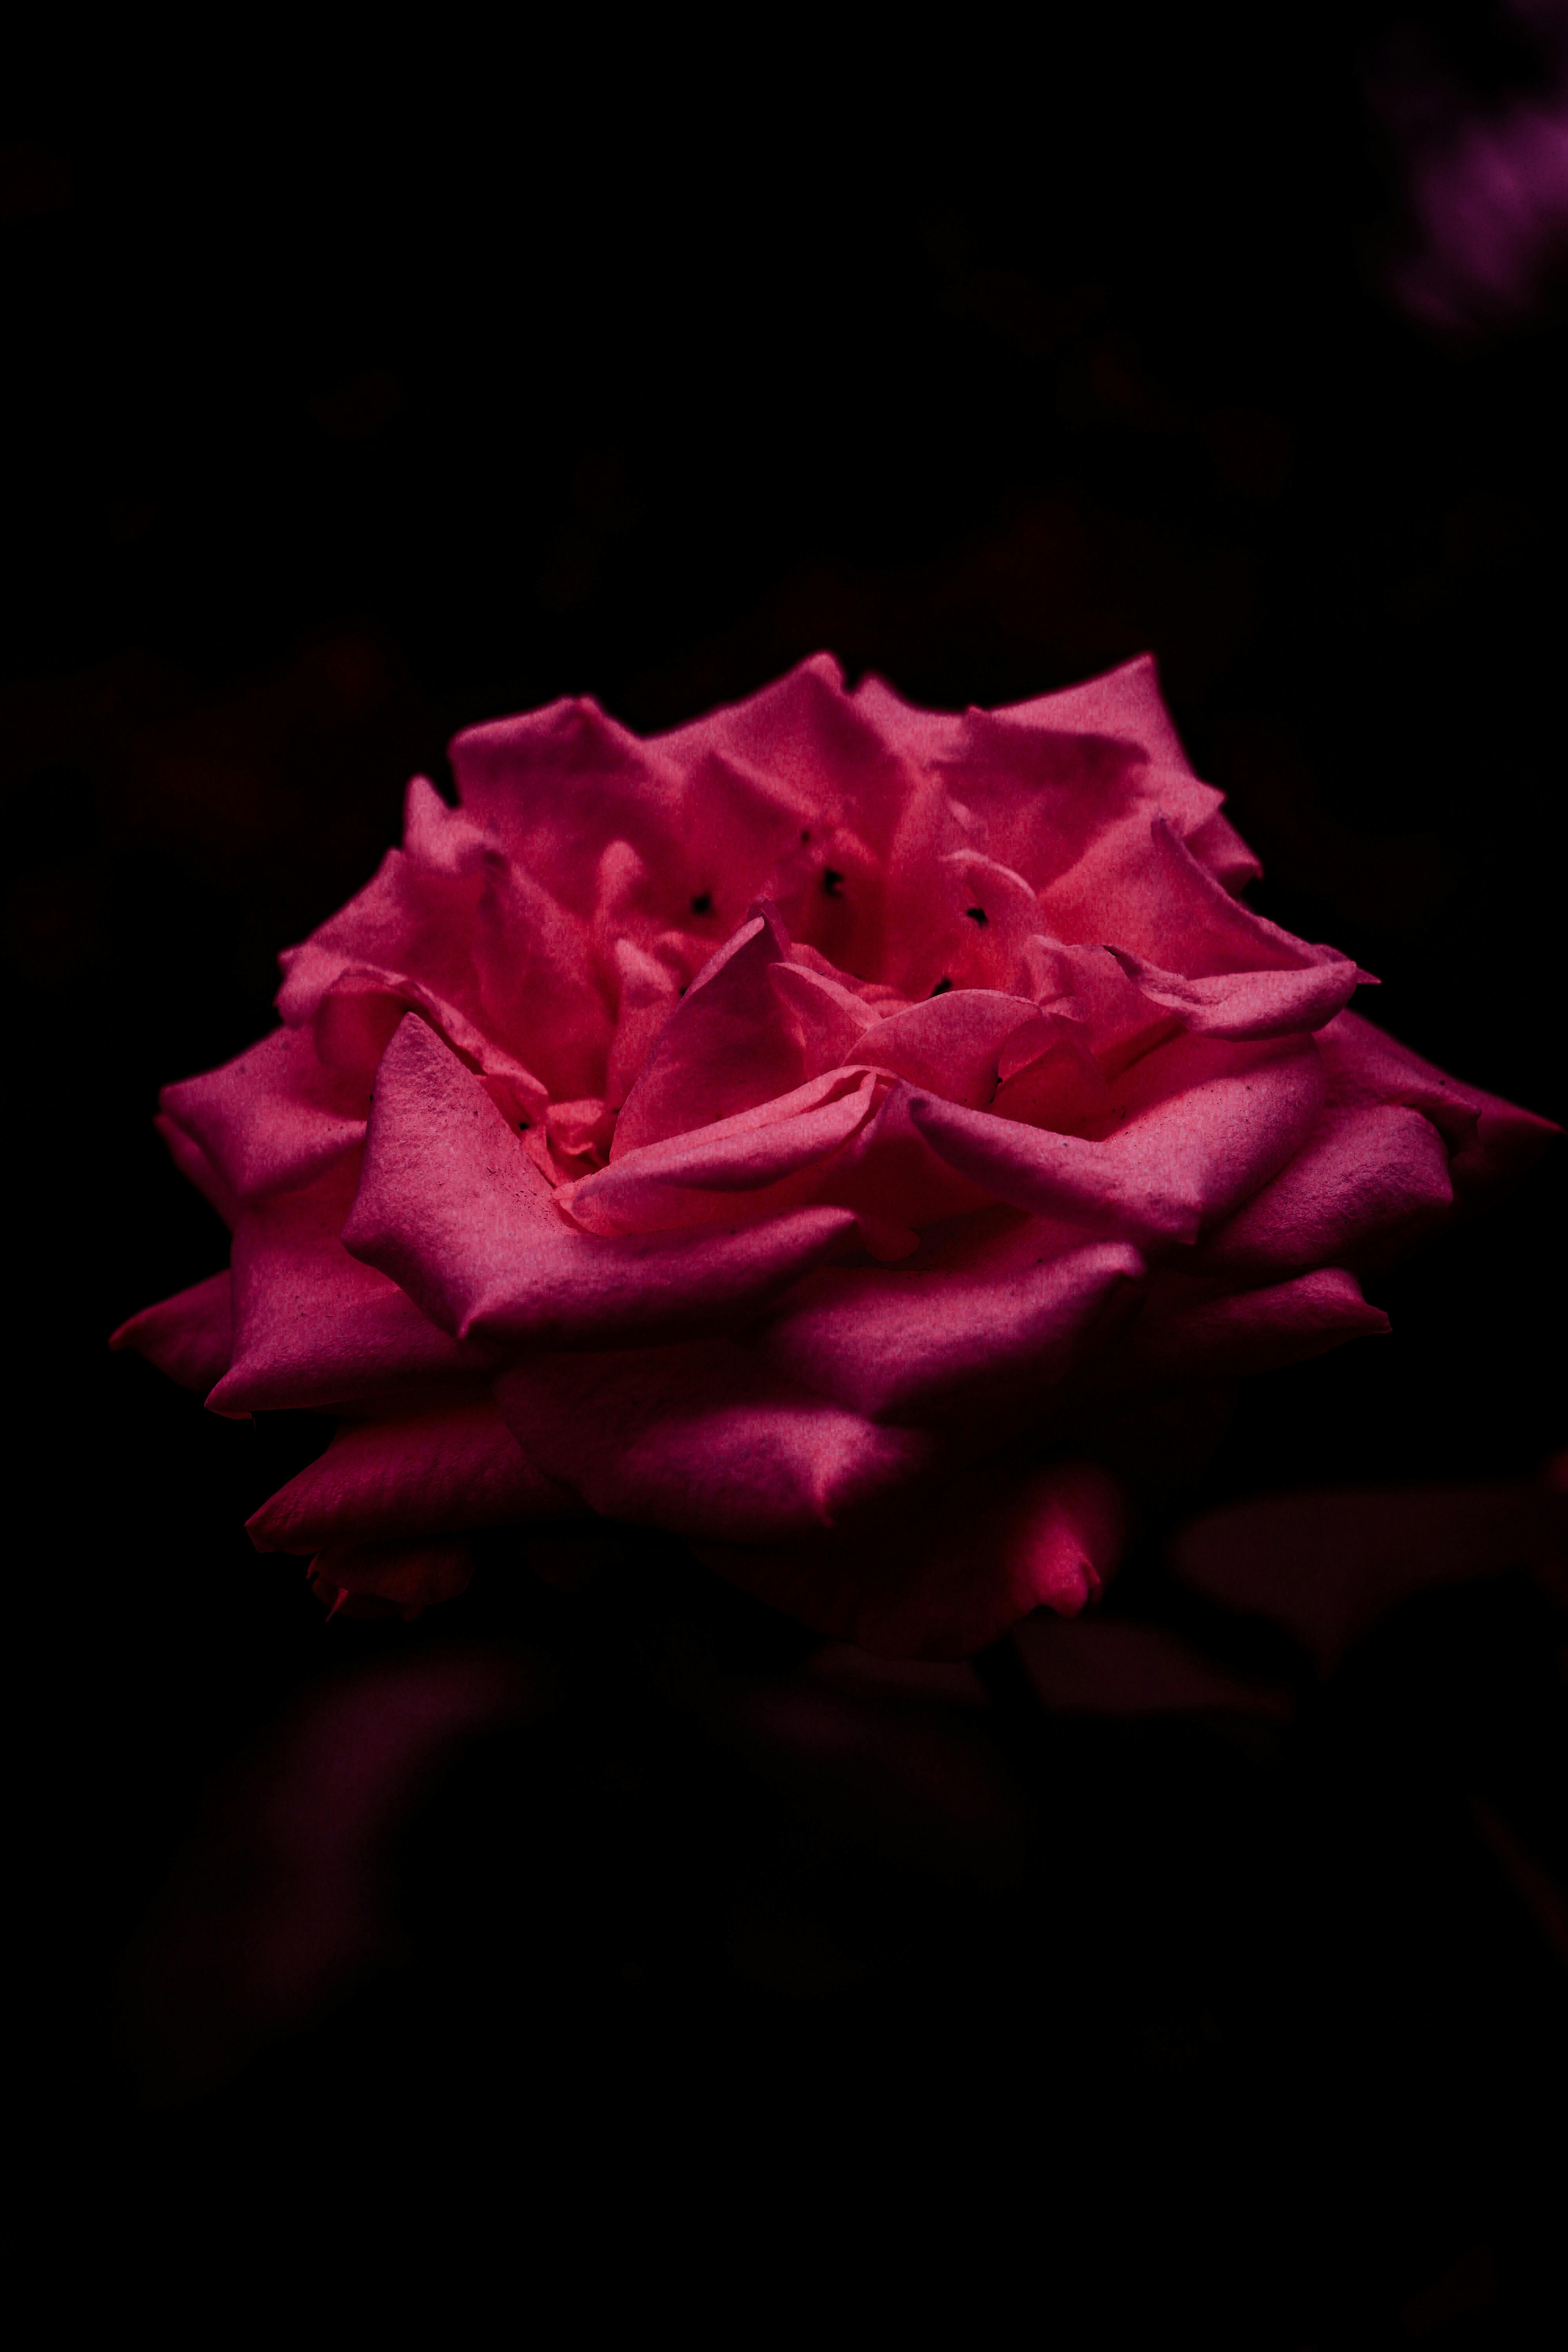 Pink Rose Background Images - Free Download on Freepik